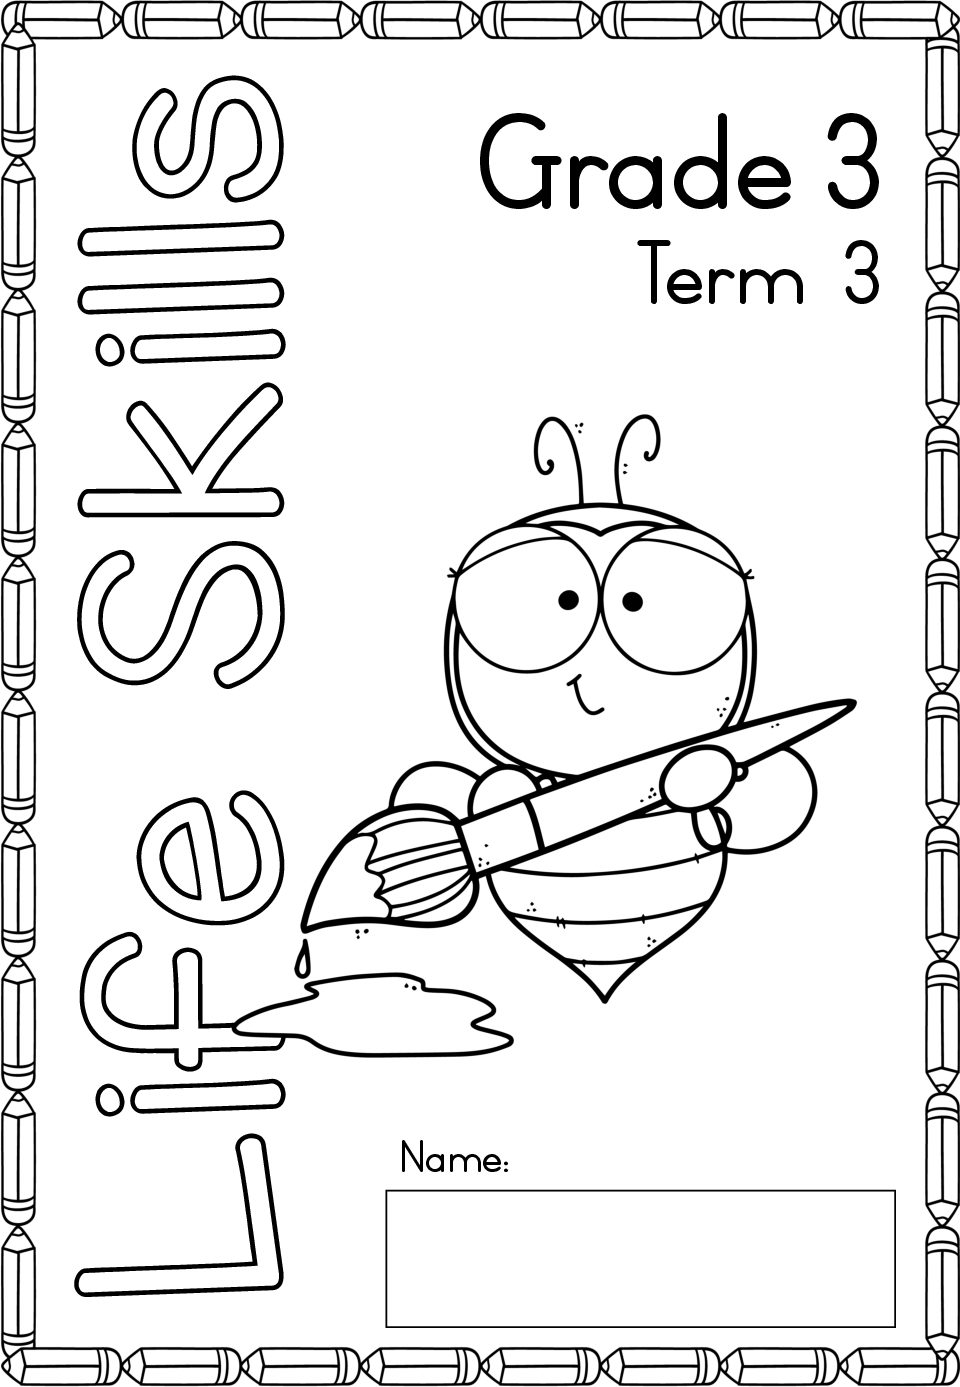 worksheets for grade 3 life skills